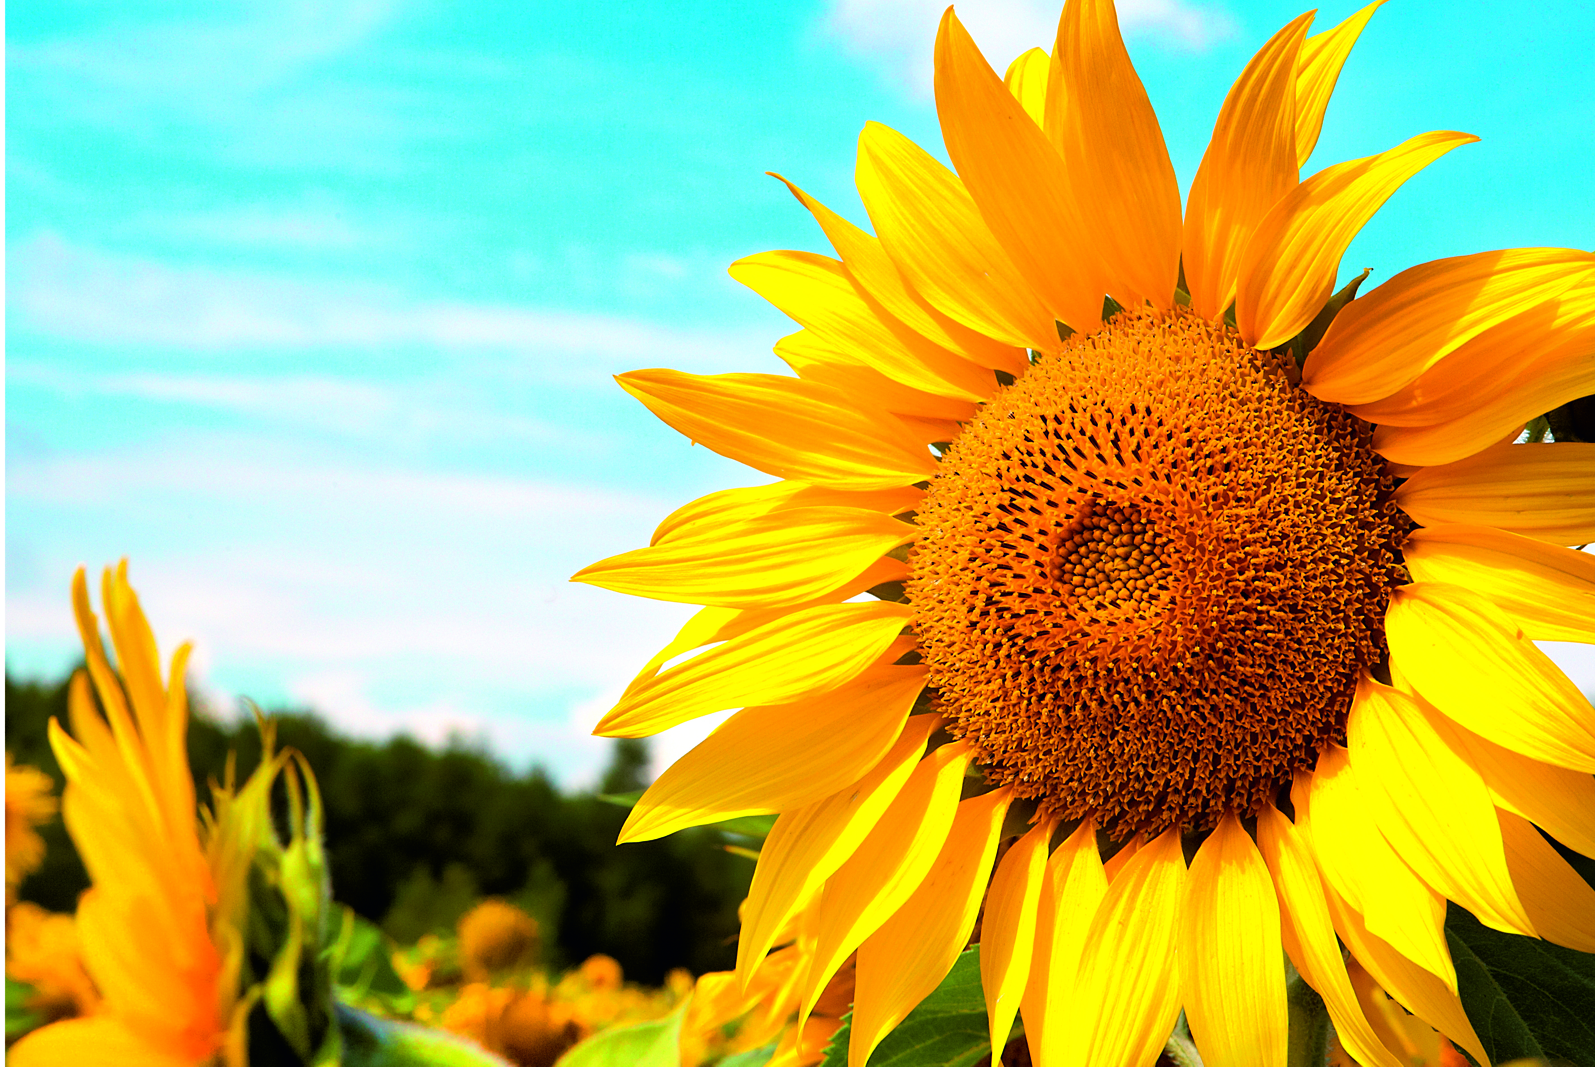 Magnettafel Pinnwand XXL Bild Sommer Sonnenblumen Feld